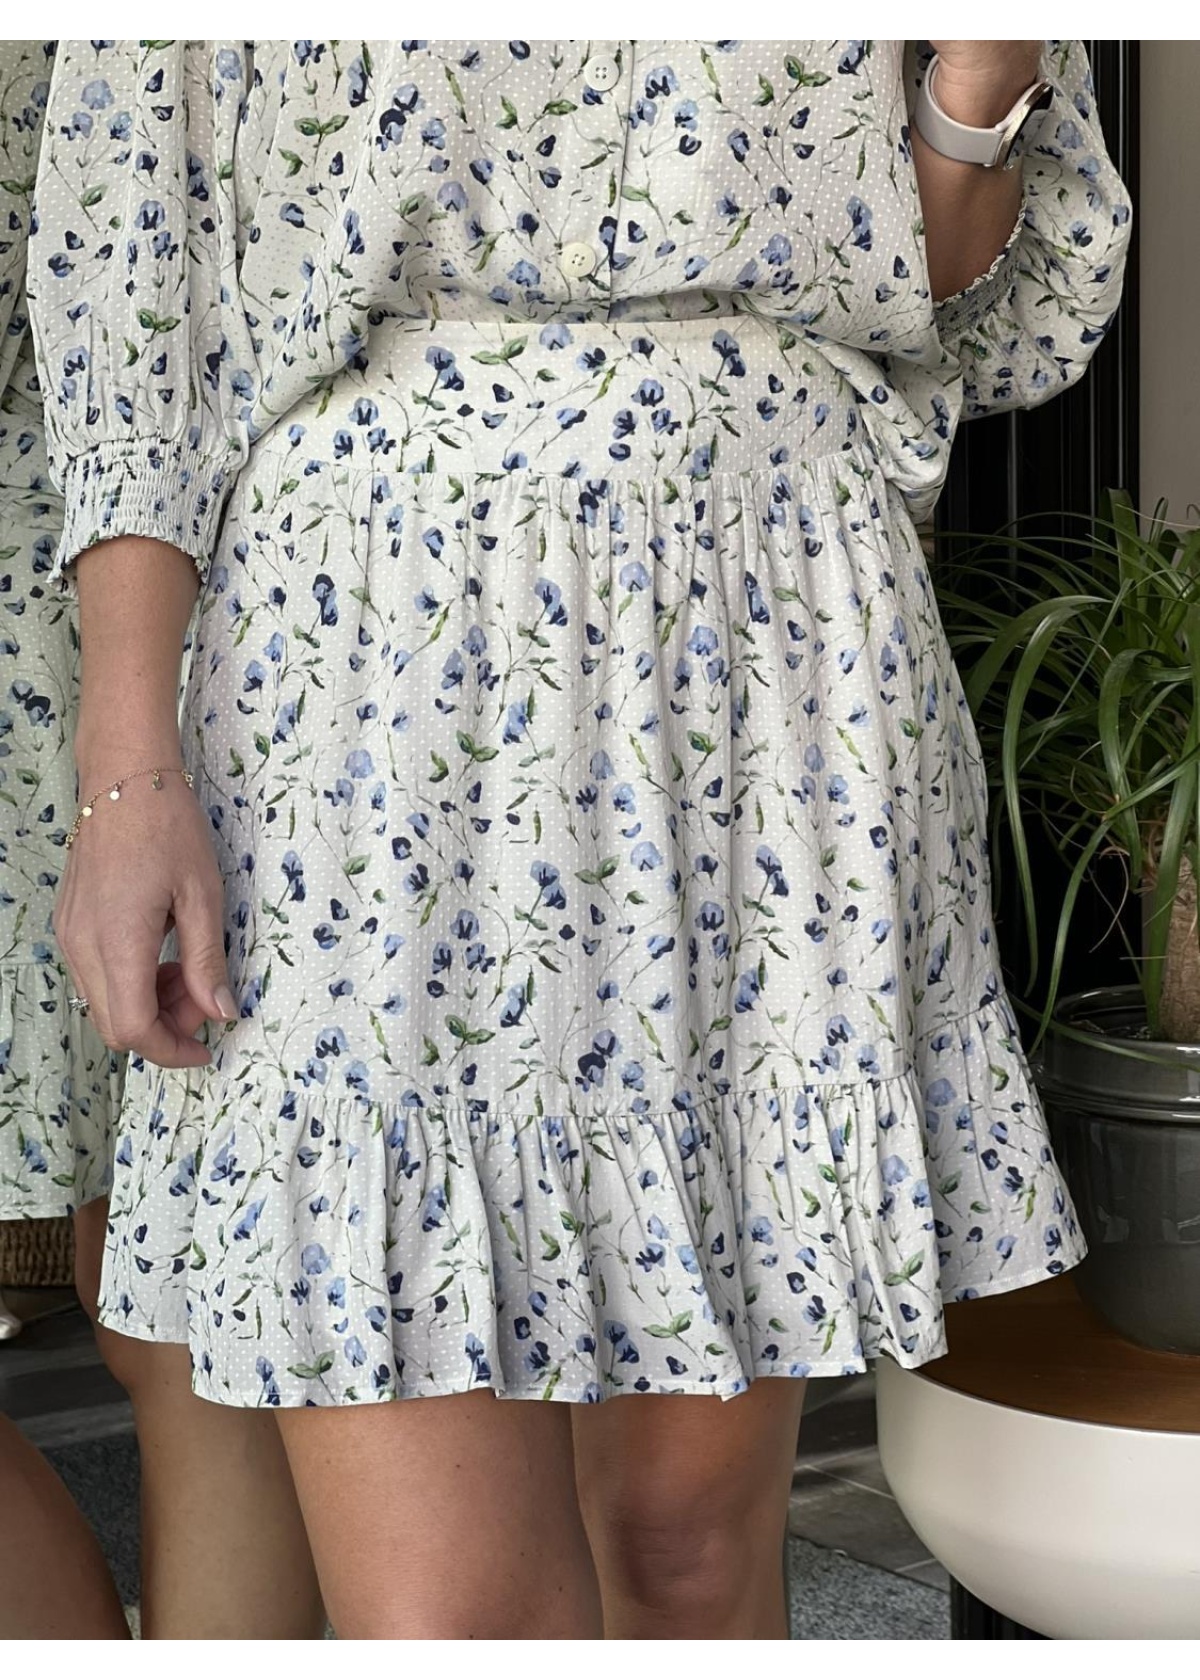 Camilla Pihl Fie skirt blue branch print